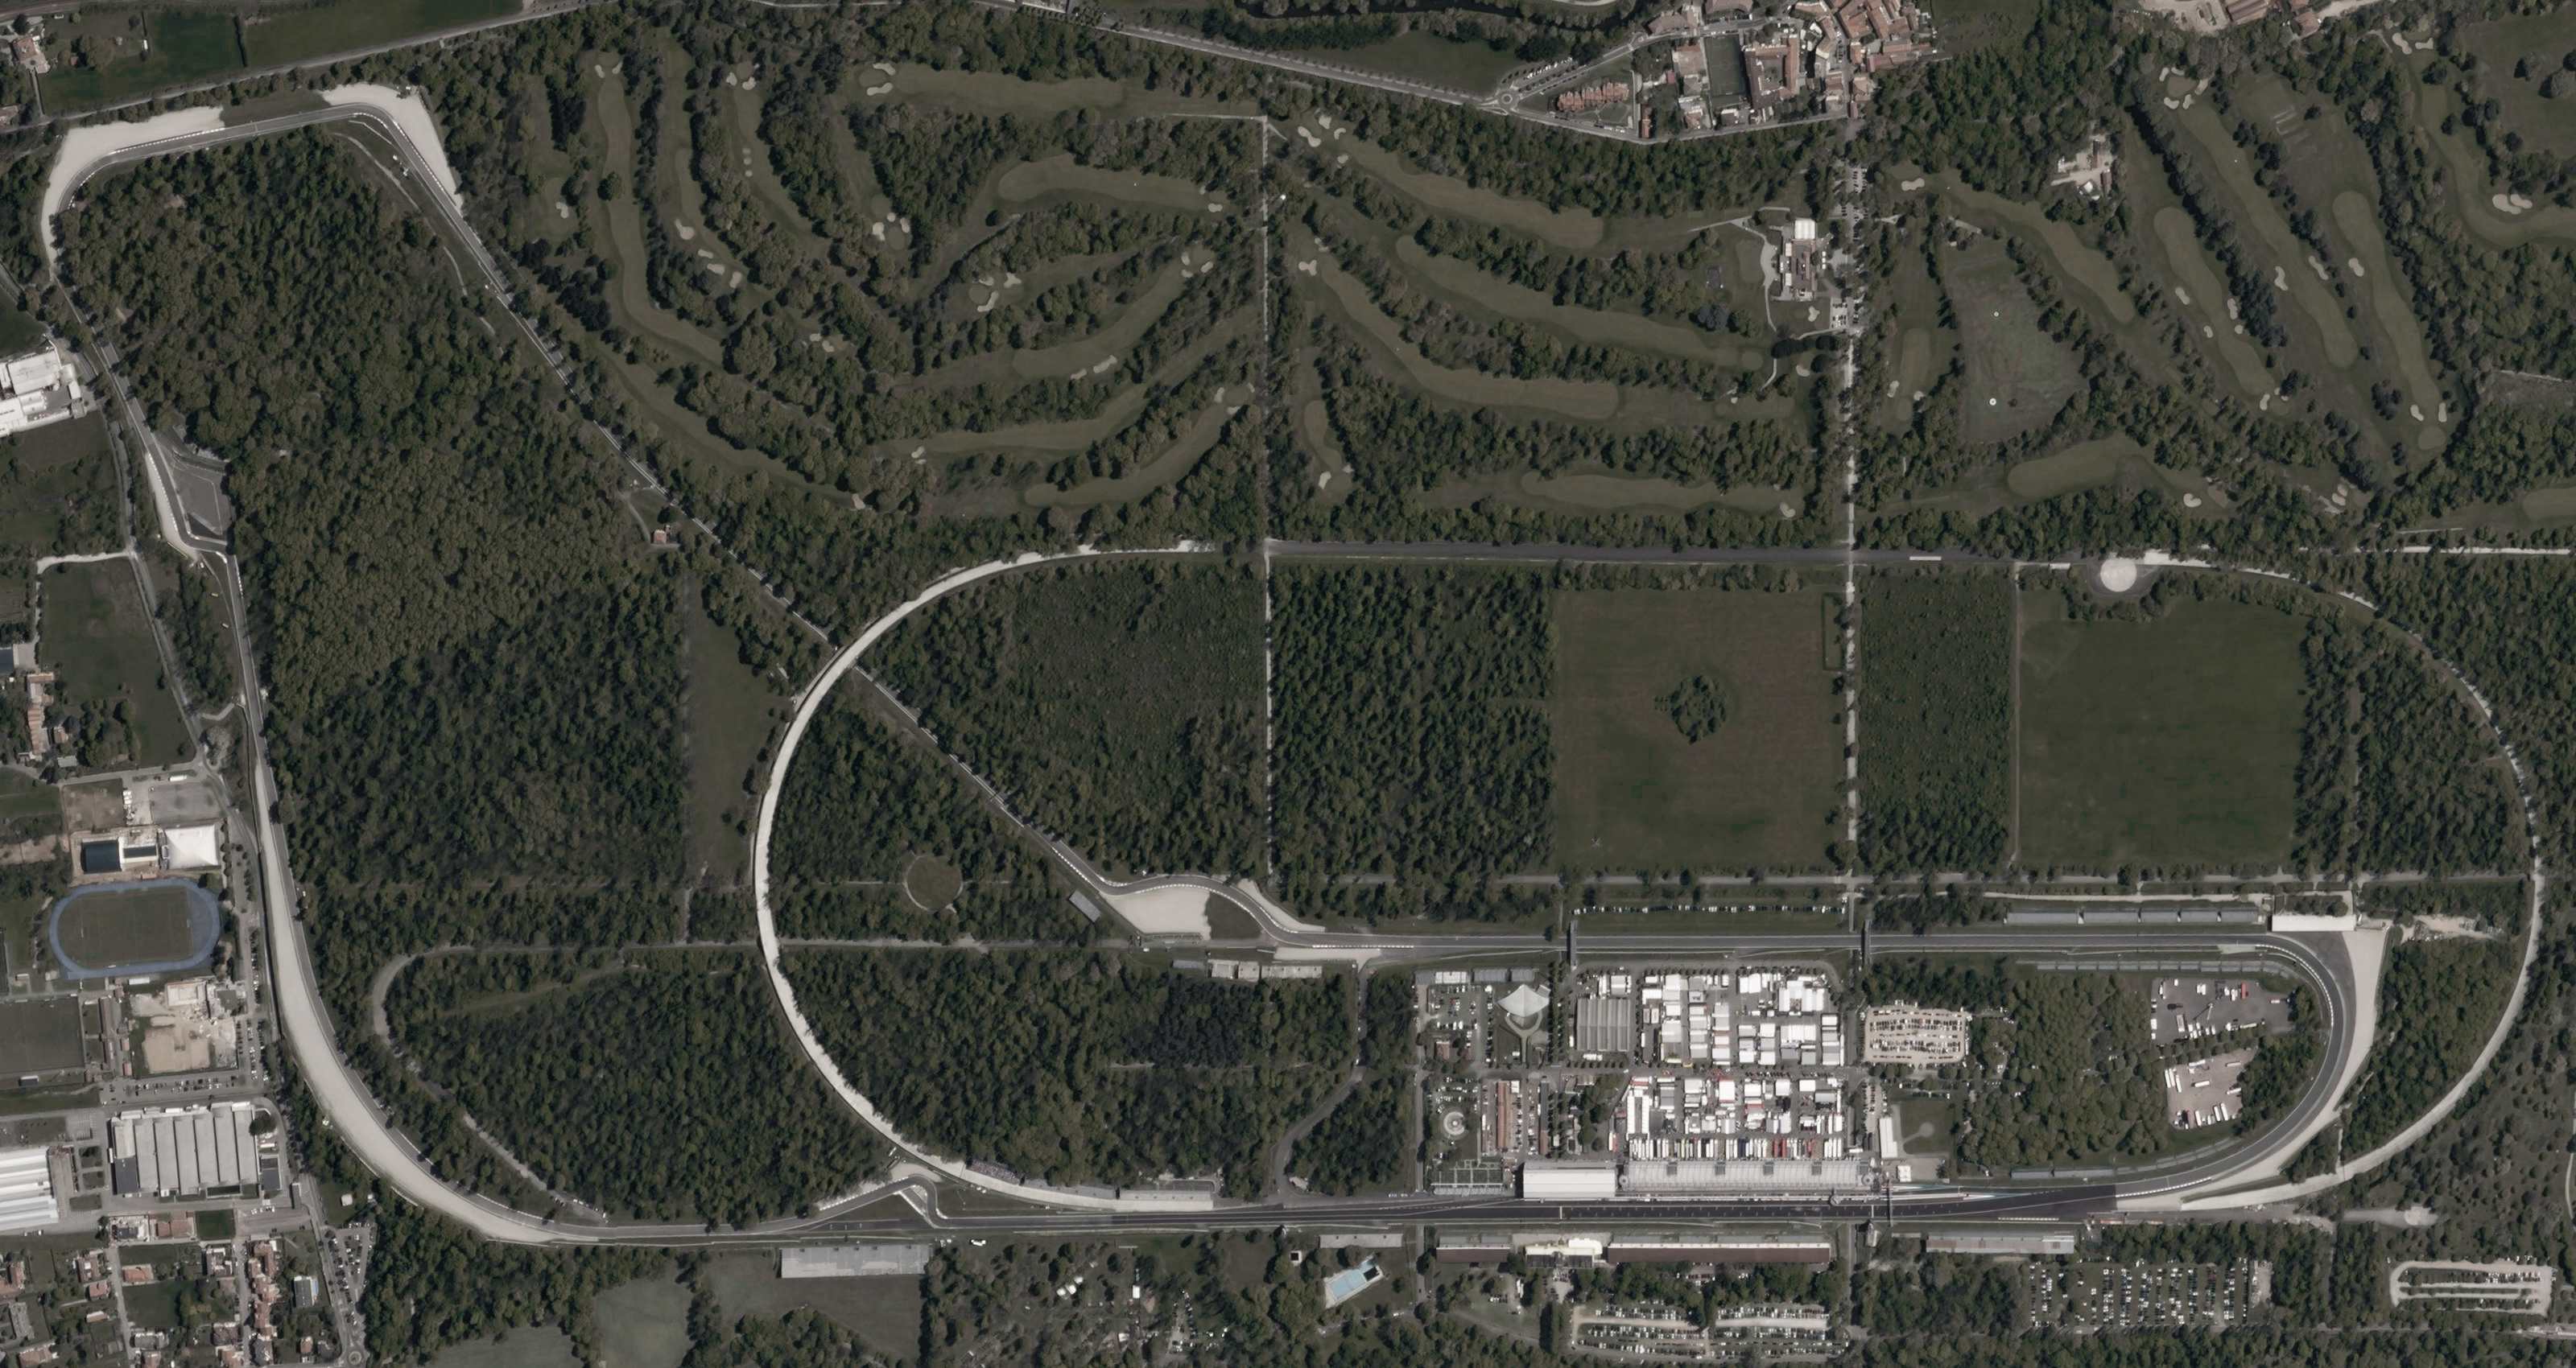 An aerial view of Autodromo Nazionale Monza